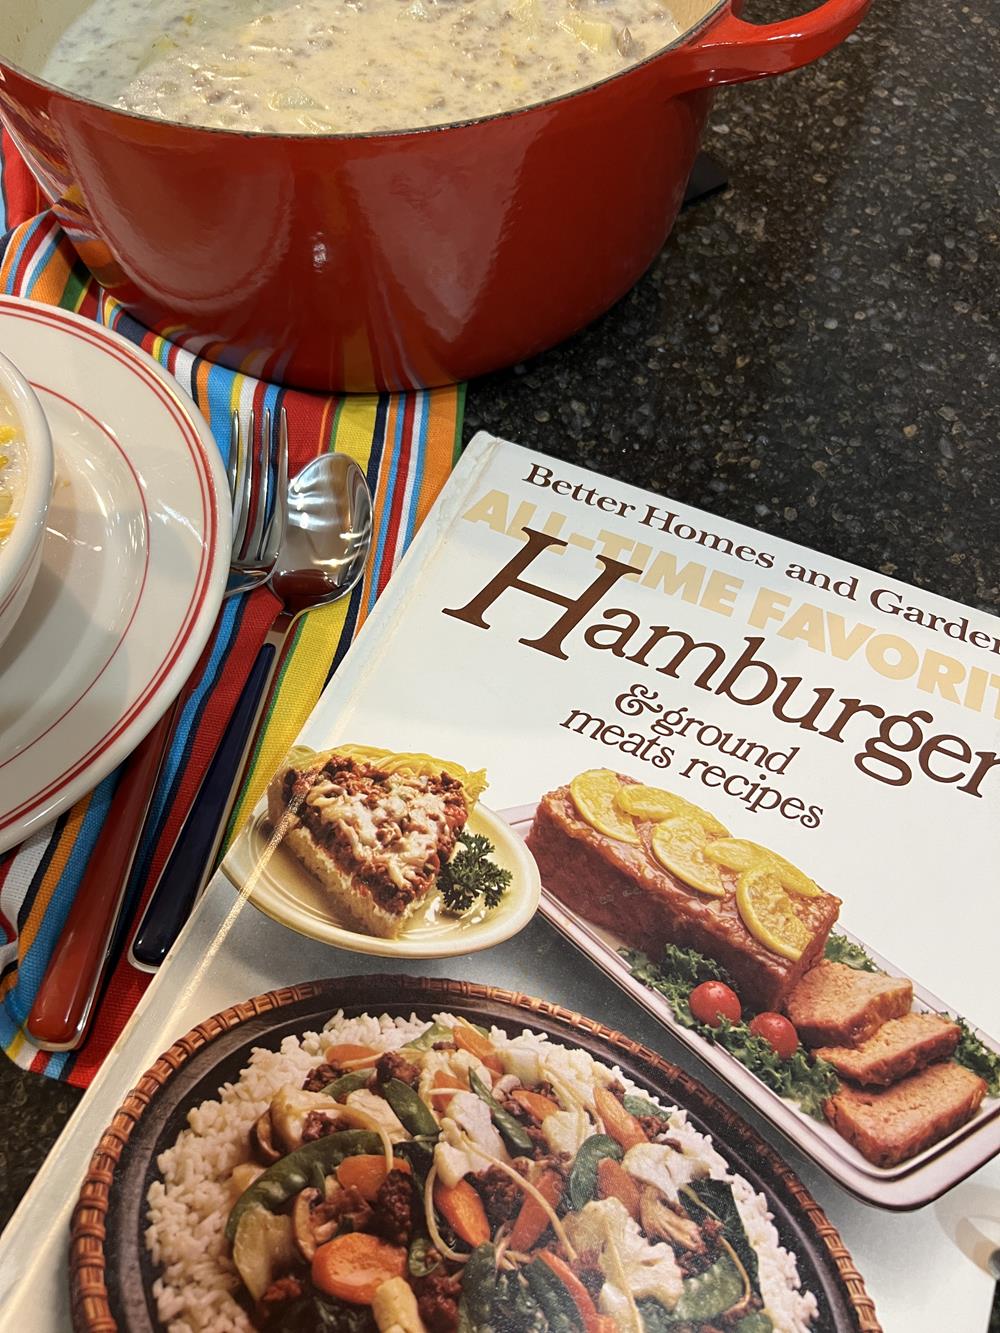 vintage hamburger cookbook next to a pot of soup